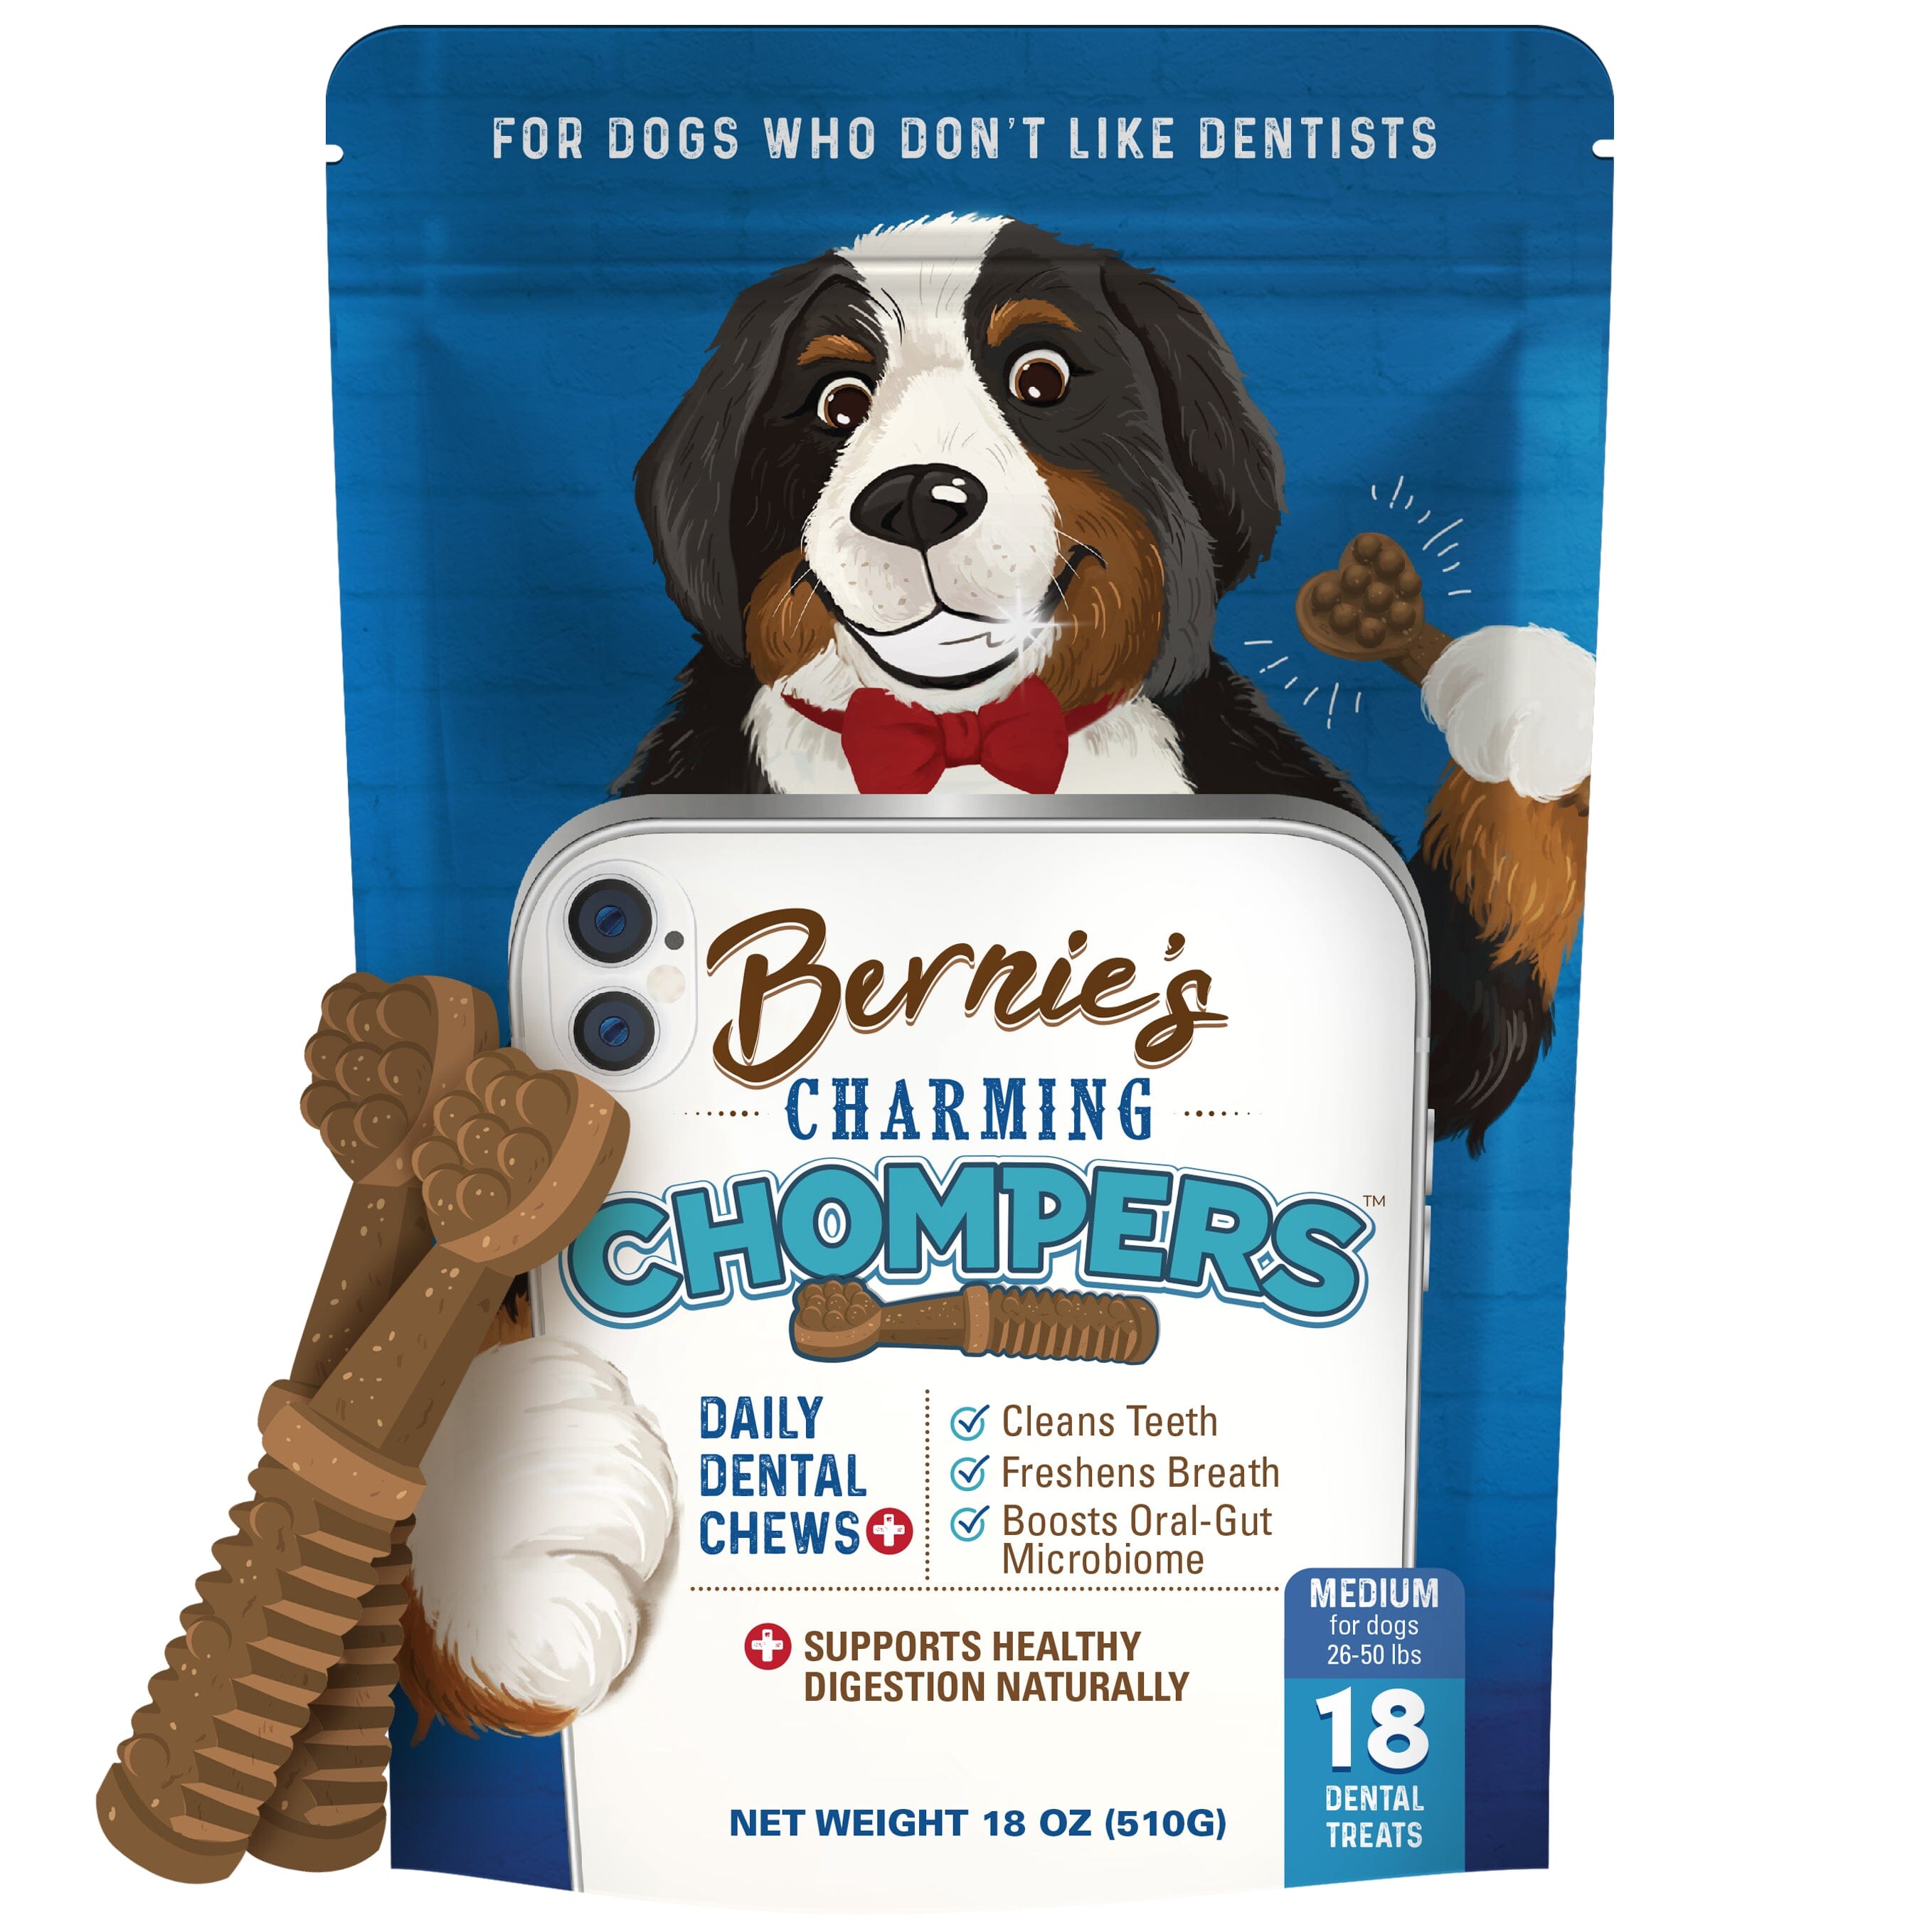 Bernie's Charming Chompers Digestive Supplement Bernie's Best Medium Dogs (26-50 lb) 18 oz - 18 Count 